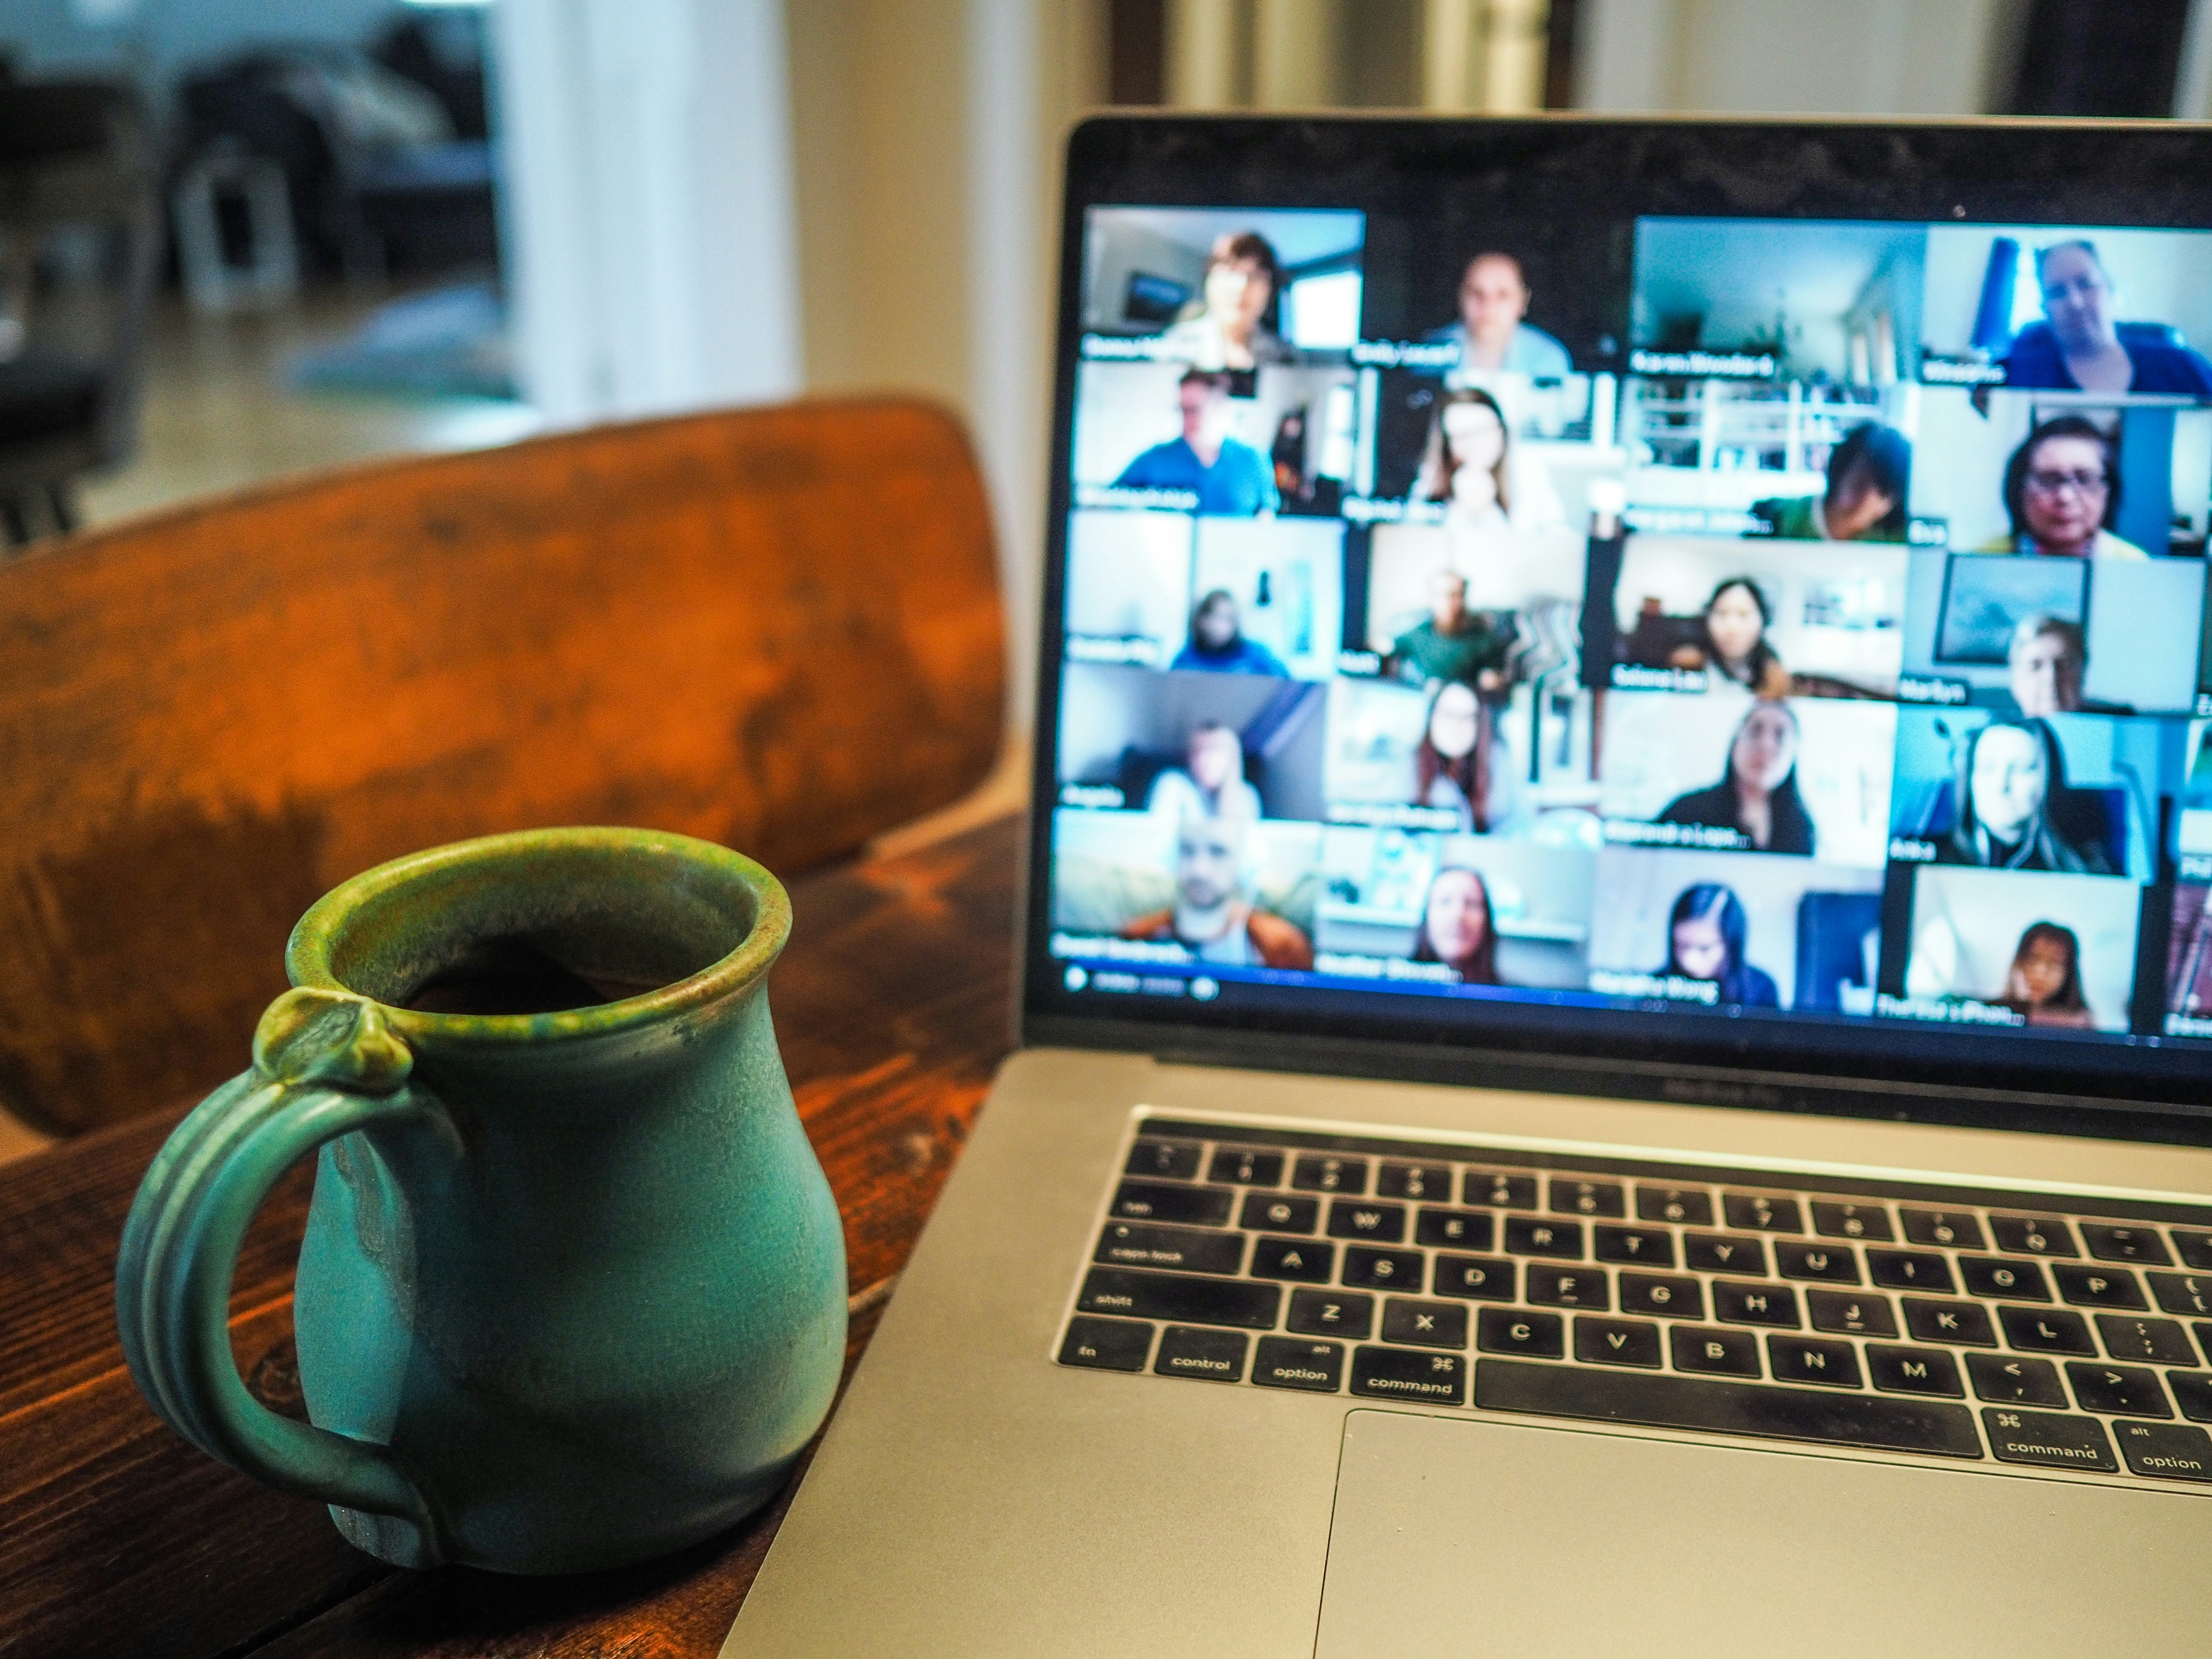 Mug next to laptop with virtual meeting on screen